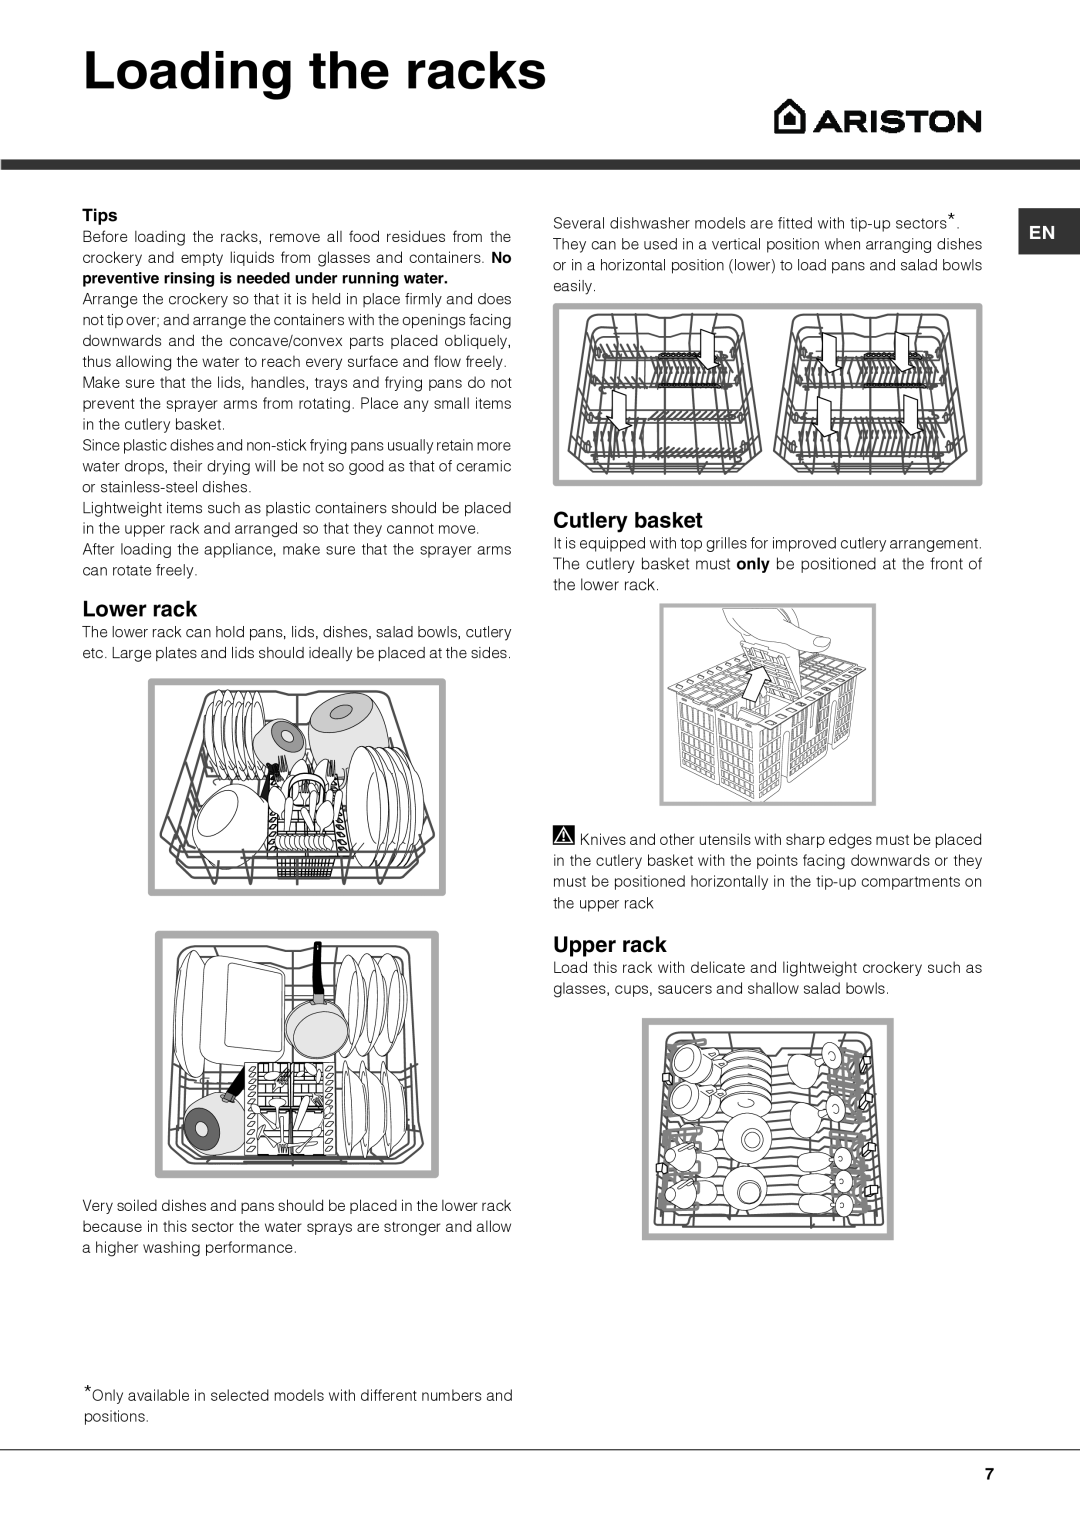 Ariston LFT M16 manual Loading the racks, Cutlery basket, Lower rack, Upper rack, Tips 